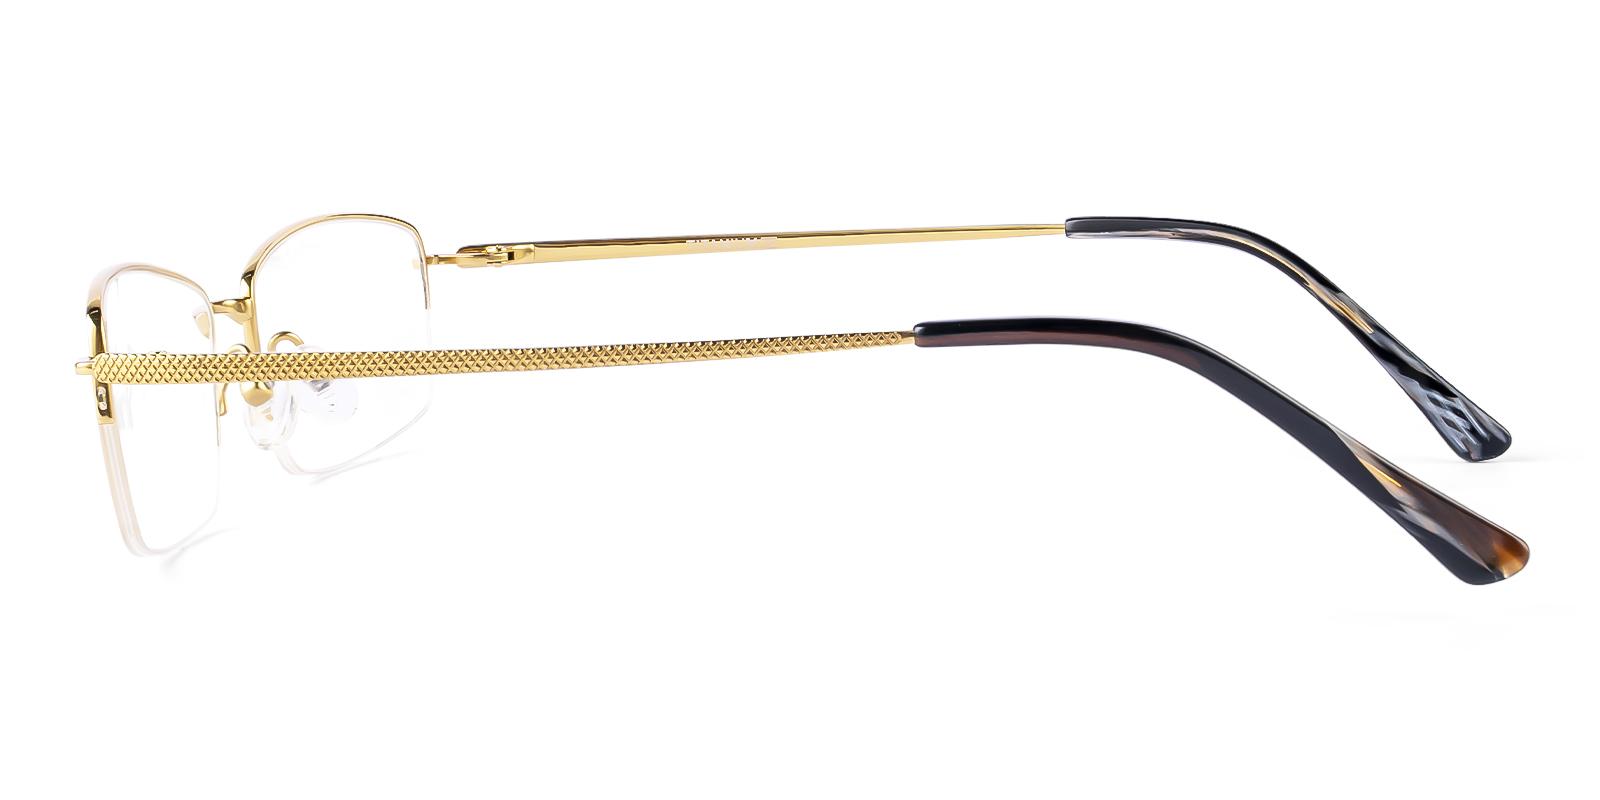 Bateur Gold Titanium Eyeglasses , NosePads Frames from ABBE Glasses